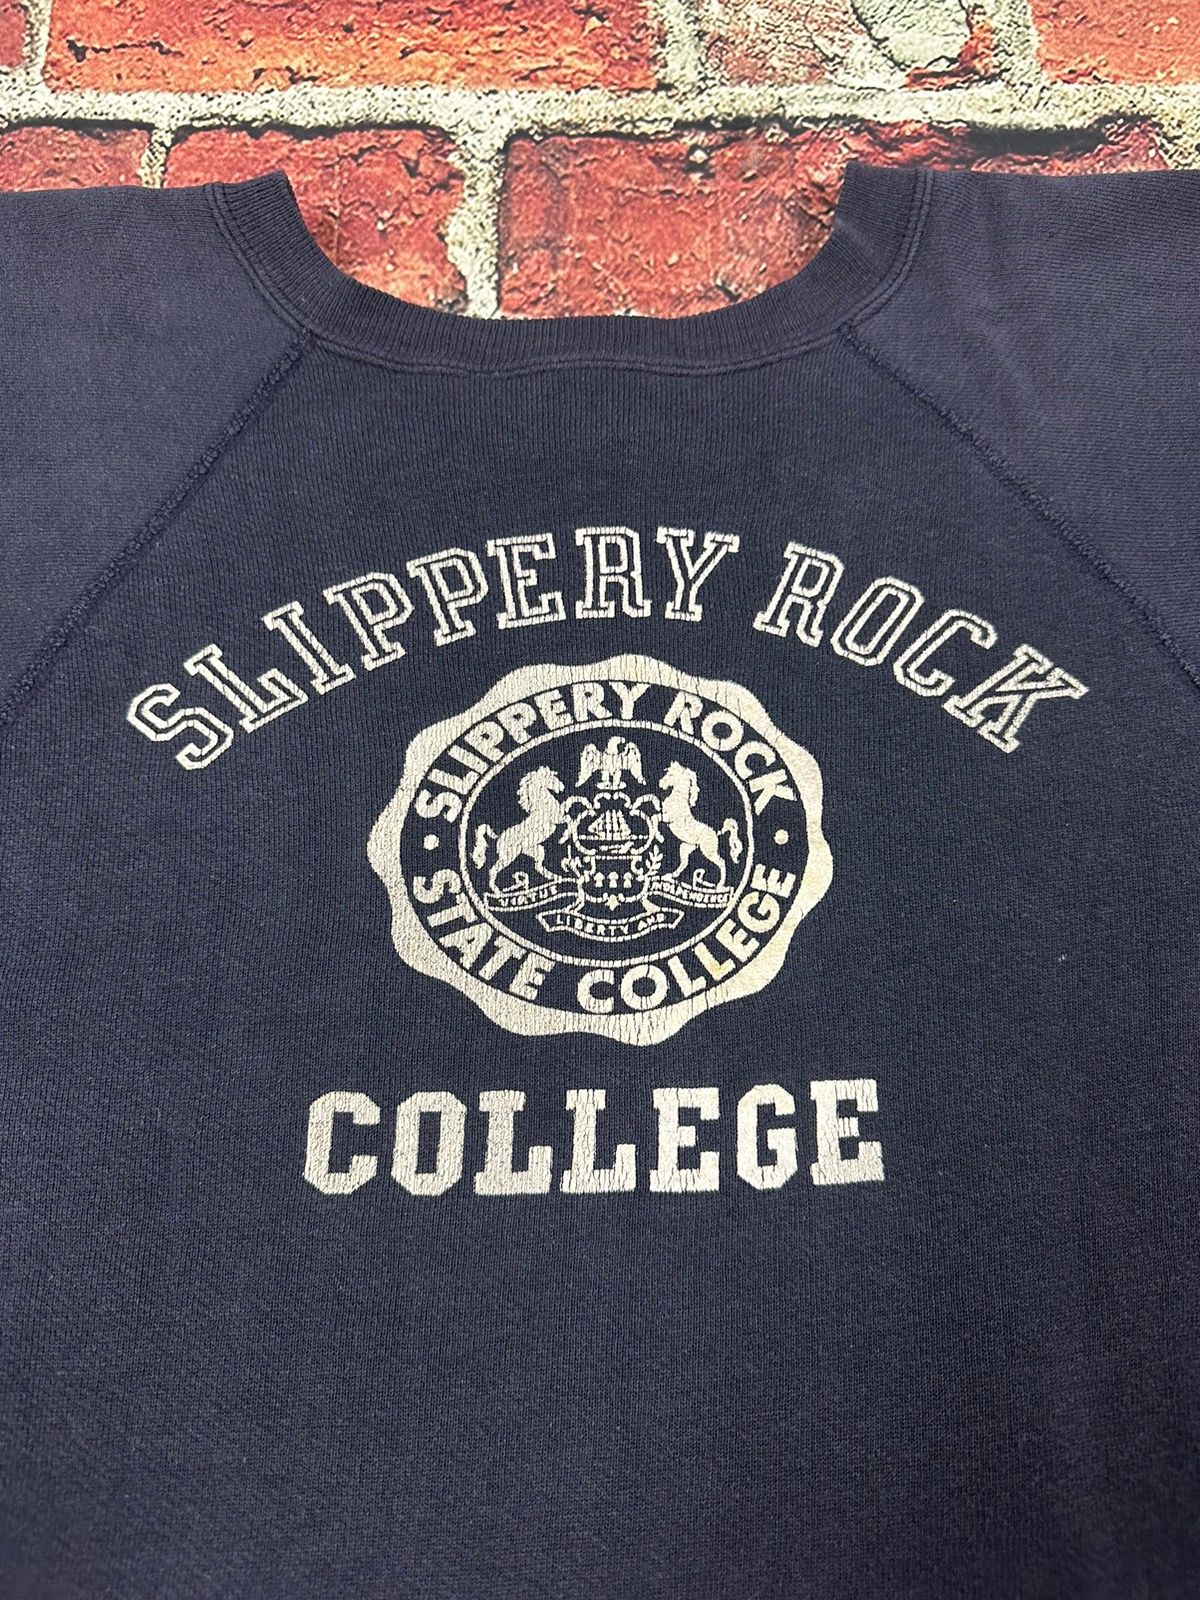 Vintage Vintage Champion Running Man Slippery Rock Sweatshirt Size US S / EU 44-46 / 1 - 5 Thumbnail